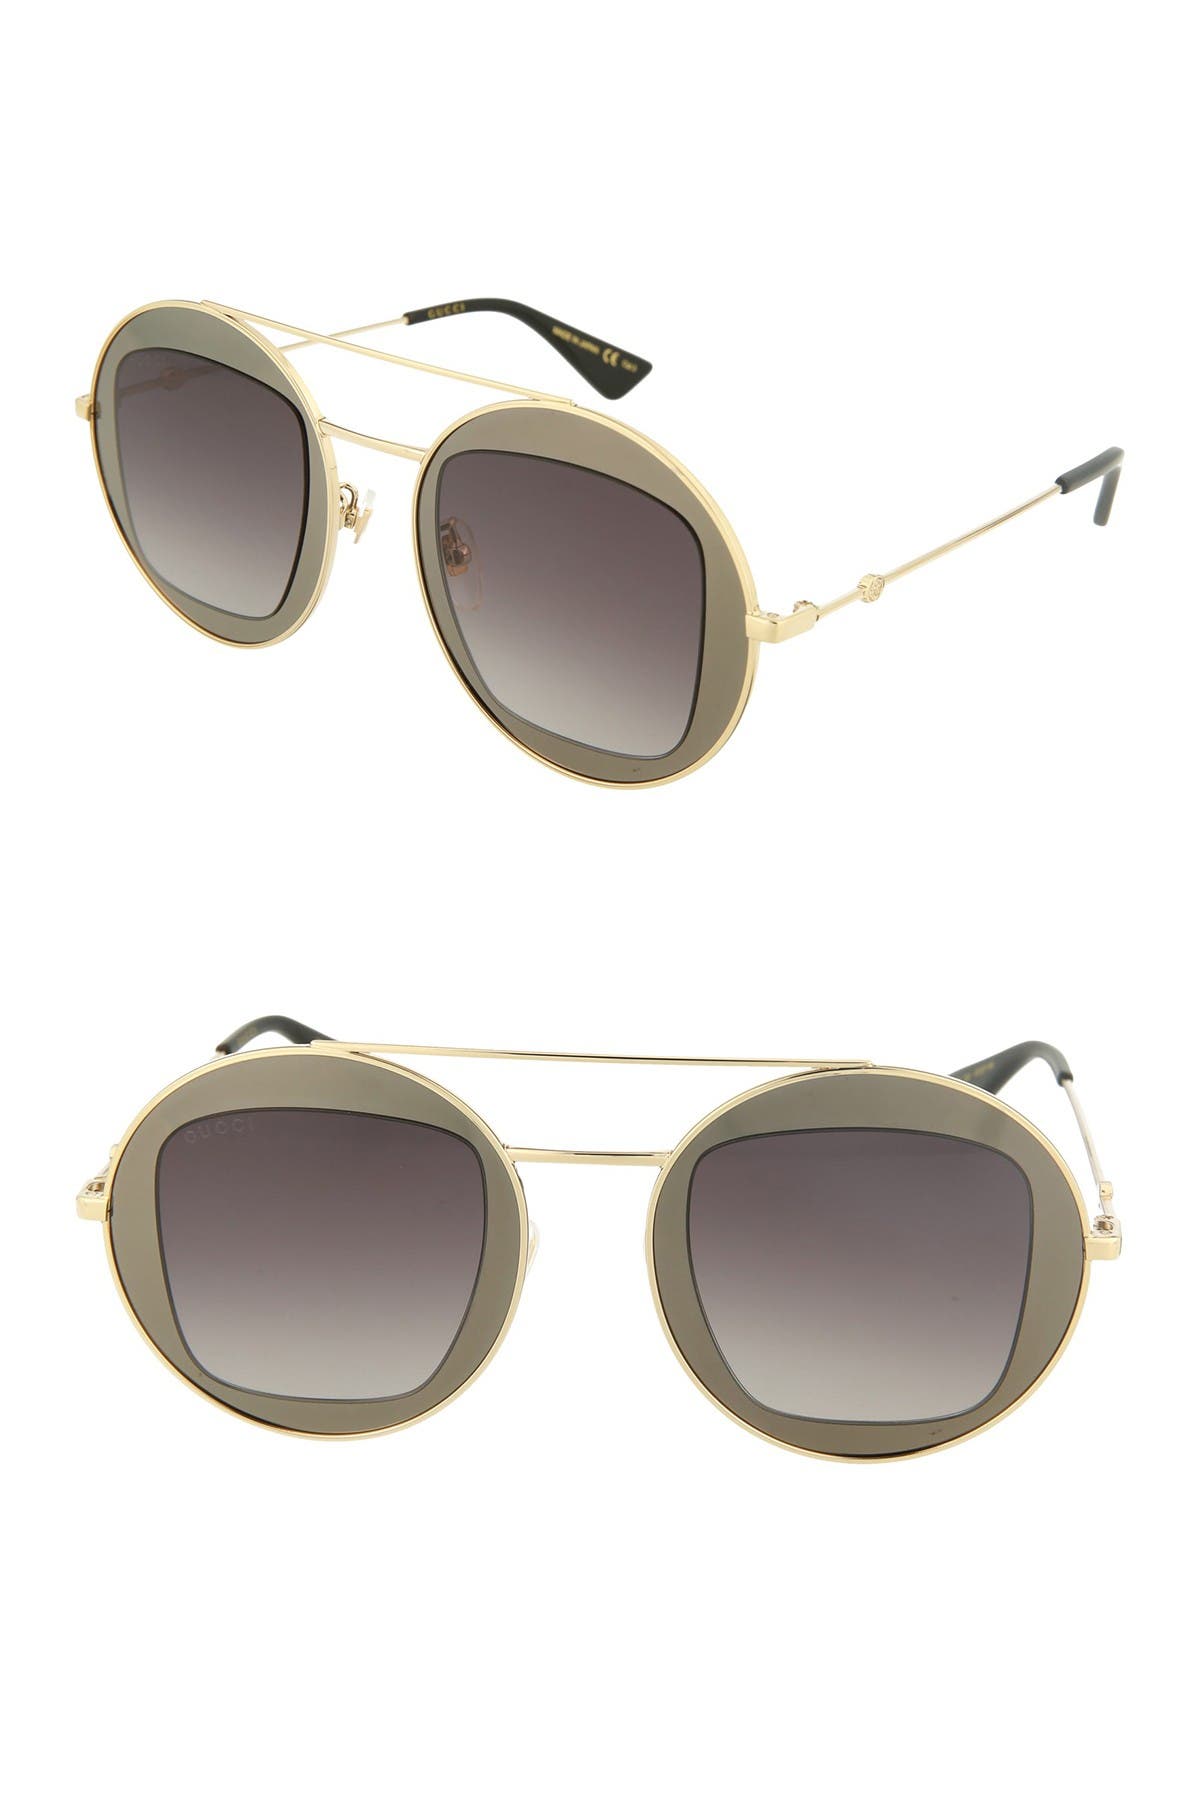 gucci sunglasses round frame